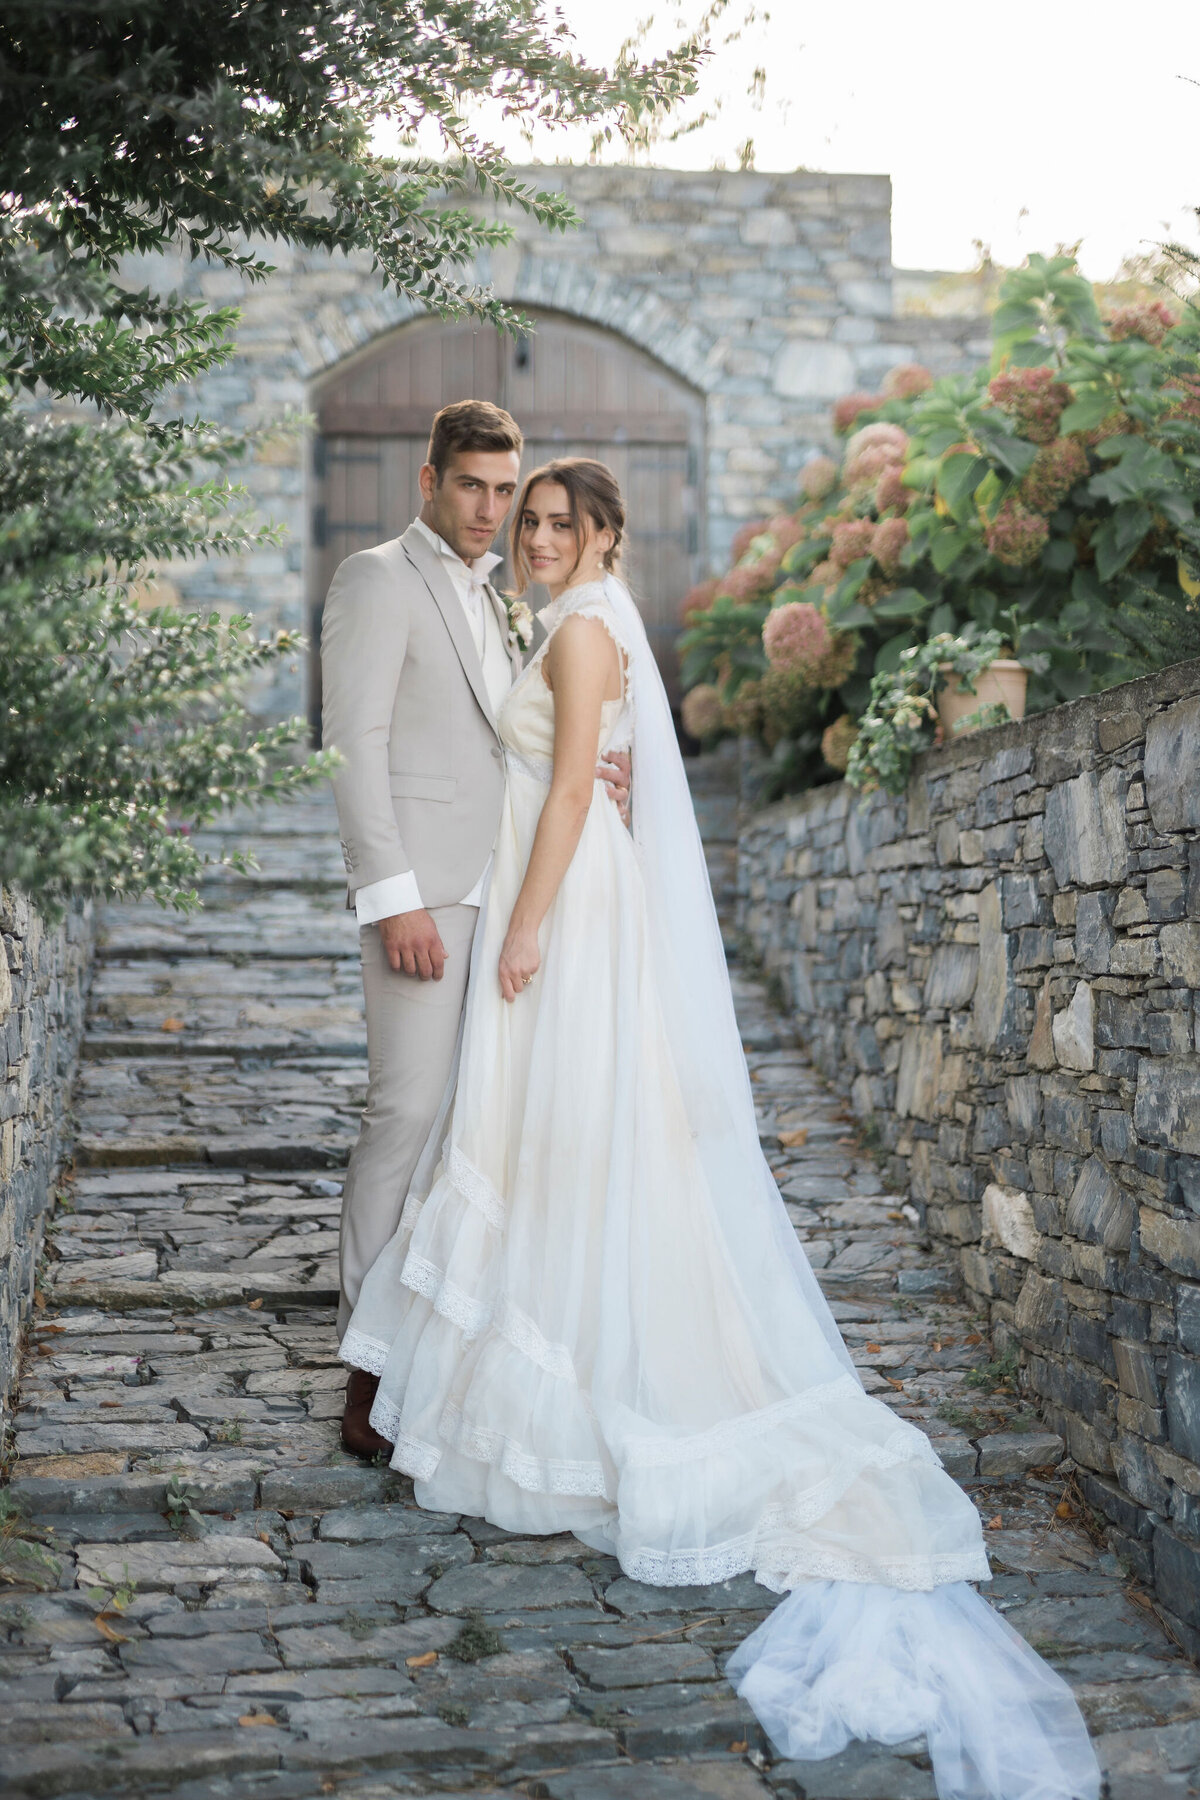 090-Mount-Pelion-Greece-Inspiration-Love-Story Elopement-Cinematic-Romance-Destination-Wedding-Editorial-Luxury-Fine-Art-Lisa-Vigliotta-Photography